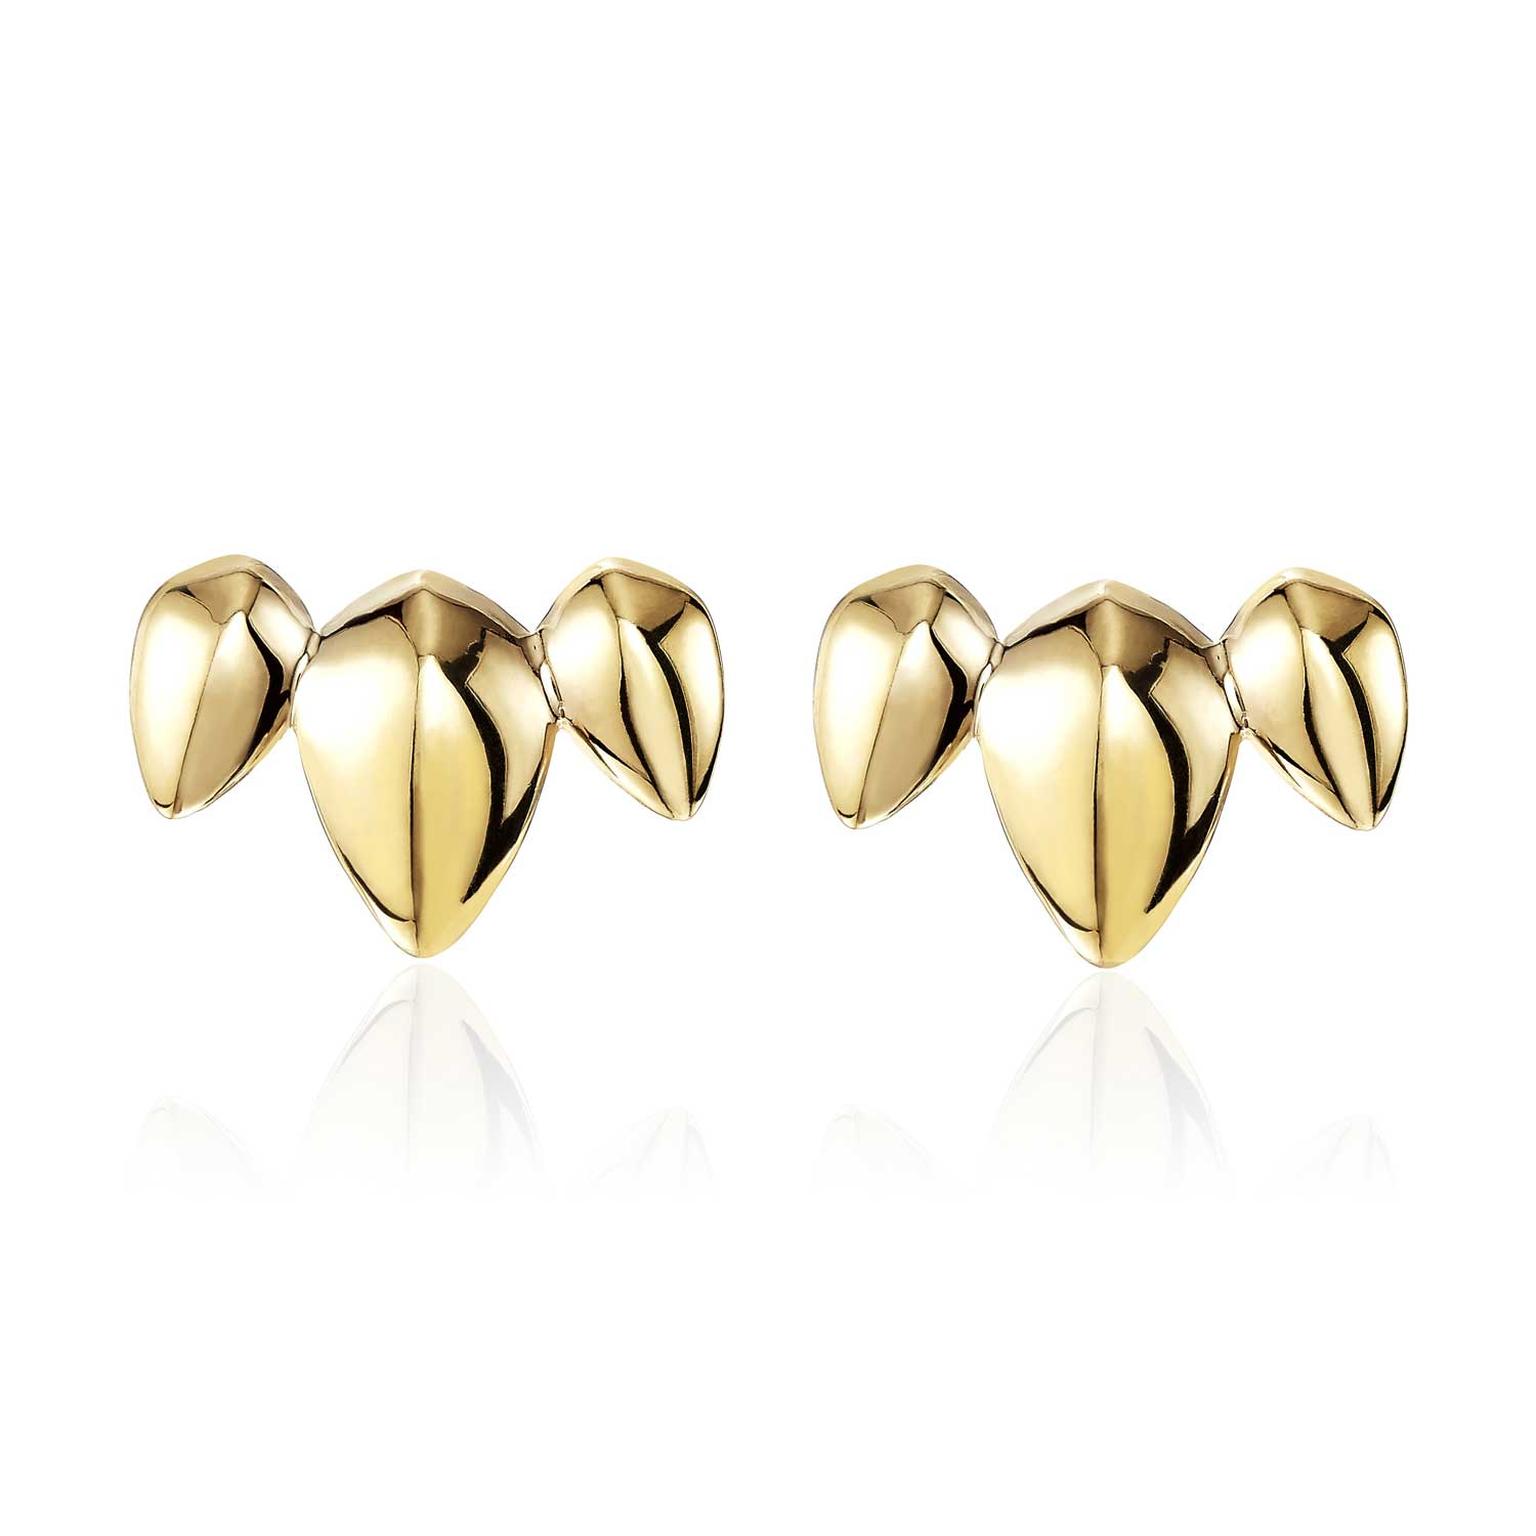 Patrick Mavros Pangolin Cresent stud earrings in gold